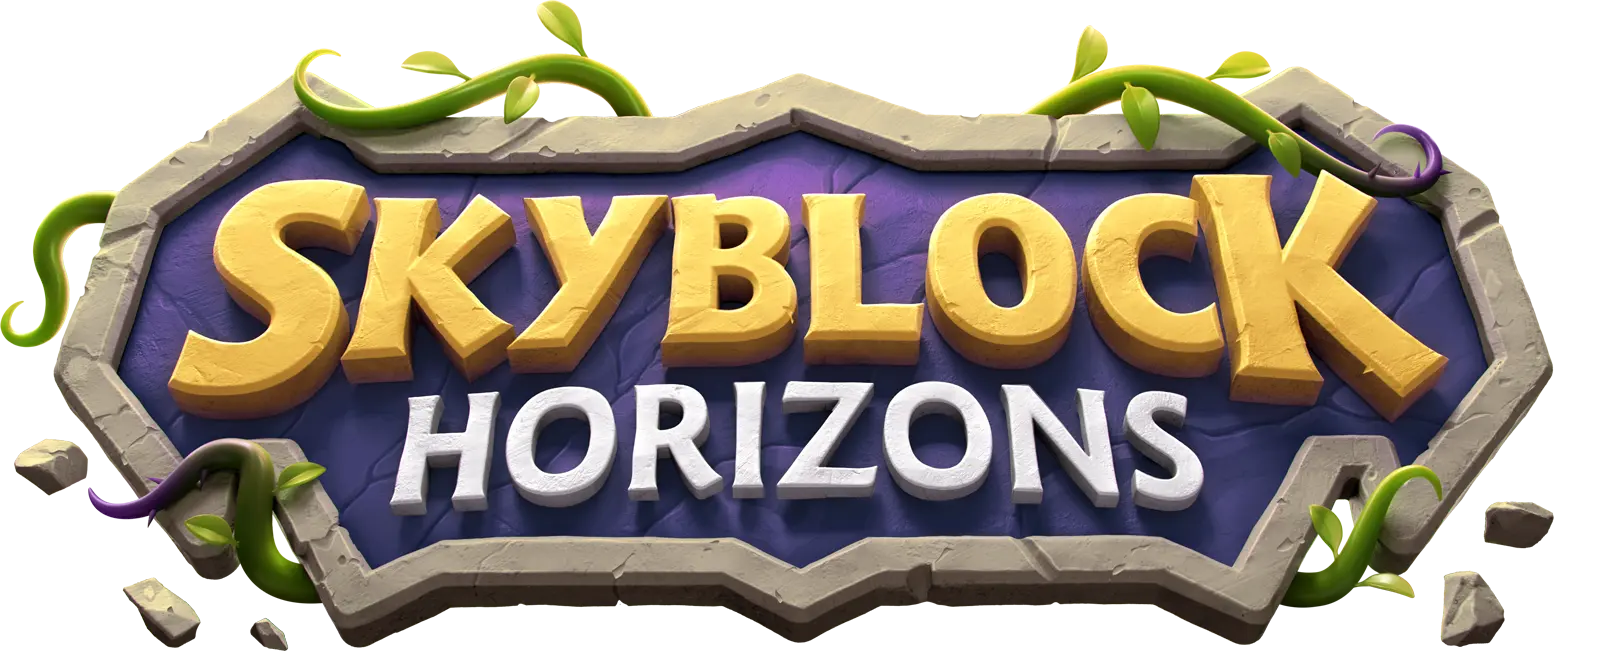 Skyblock Horizons